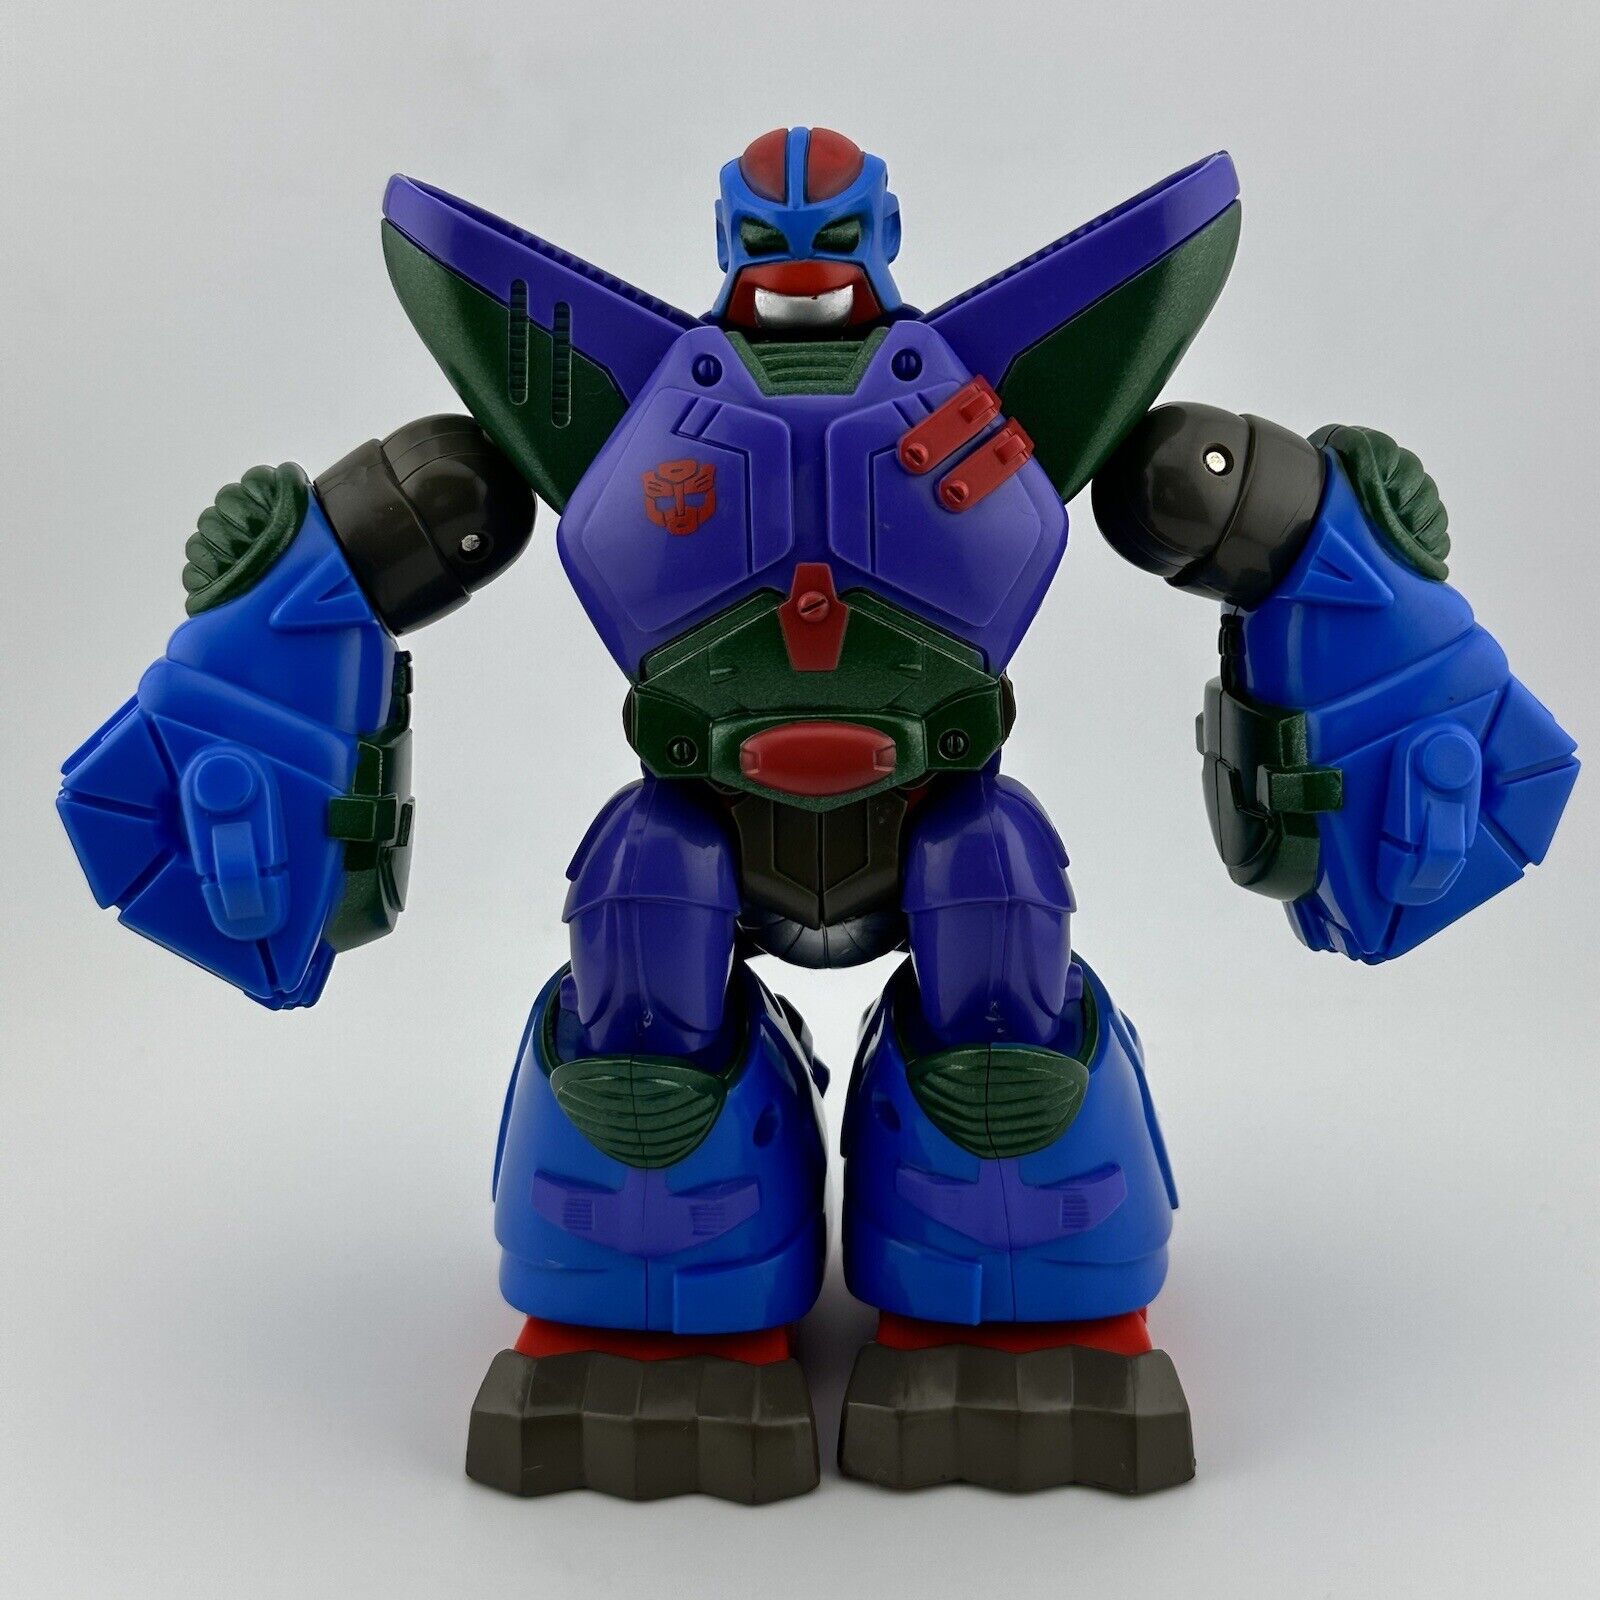 2001 Playskool Transformers Big Adventures Gorilla Bot Figure Hasbro